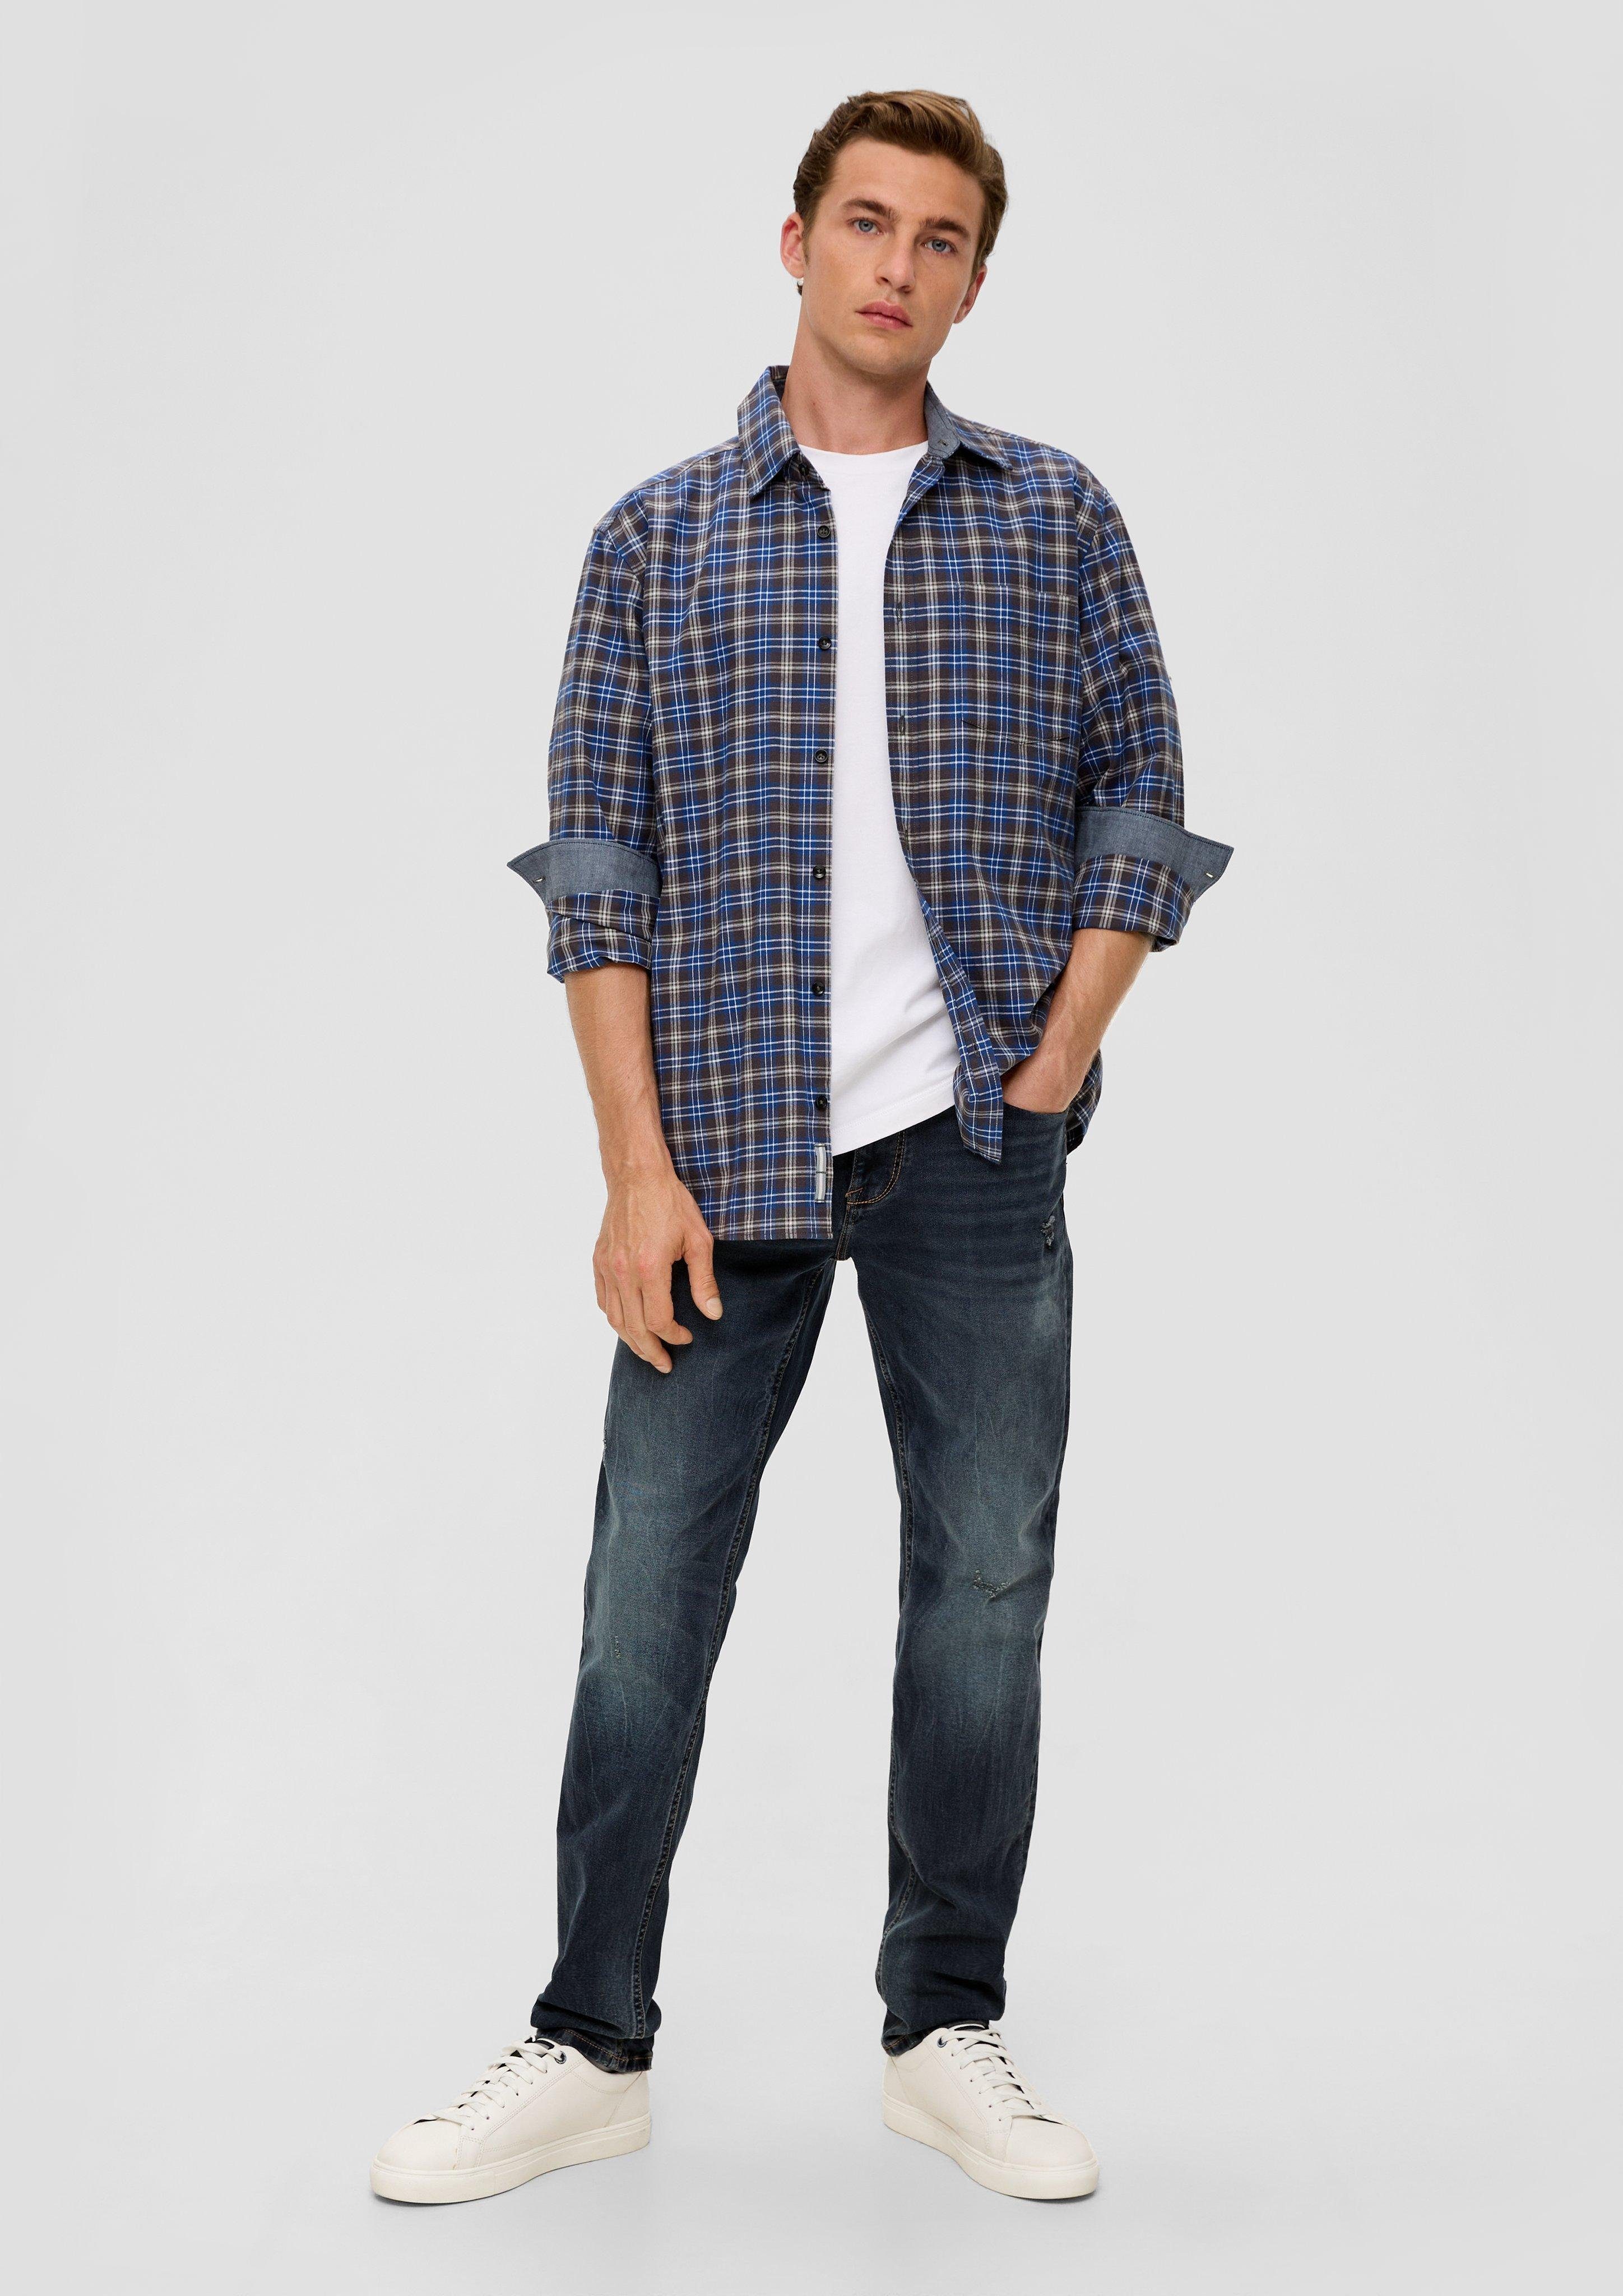 s.Oliver Stoffhose Jeans Rise Mid Fit / Label-Patch, Slim dunkelblau / Nelio Slim / Destroyes Leg